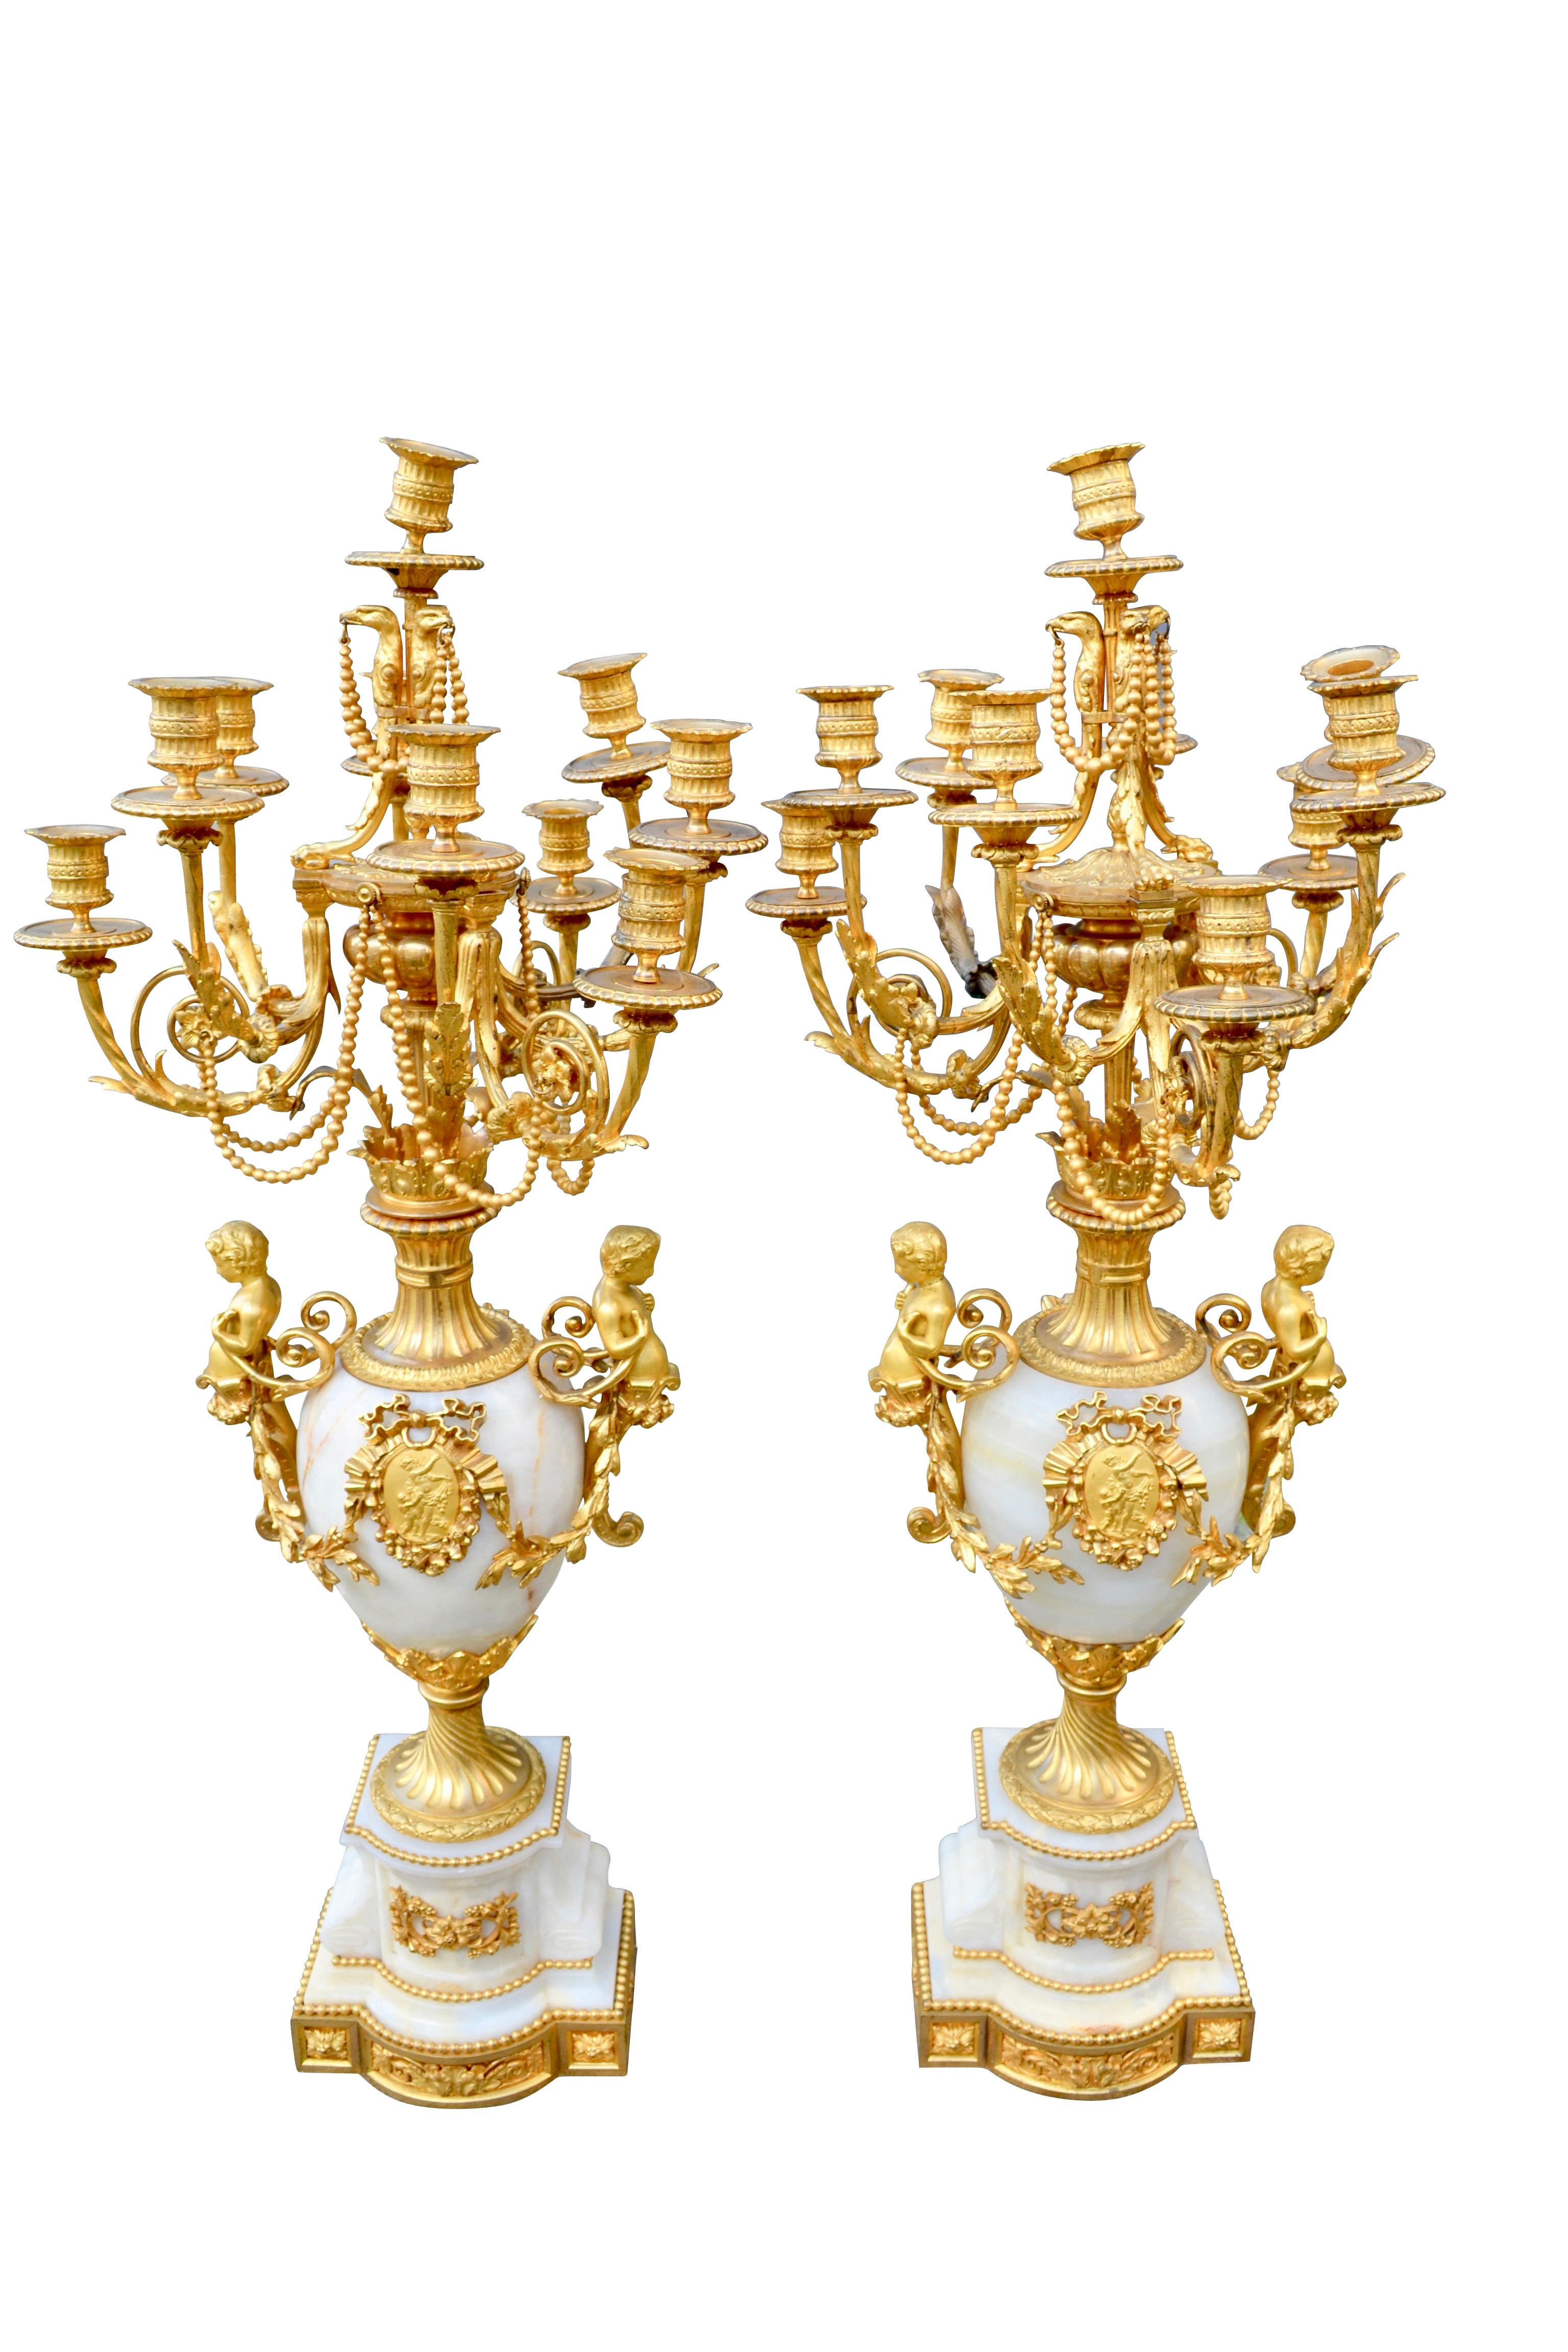 Palatial Scale Onyx and Gilt Bronze Napoleon III Candelabra For Sale 1